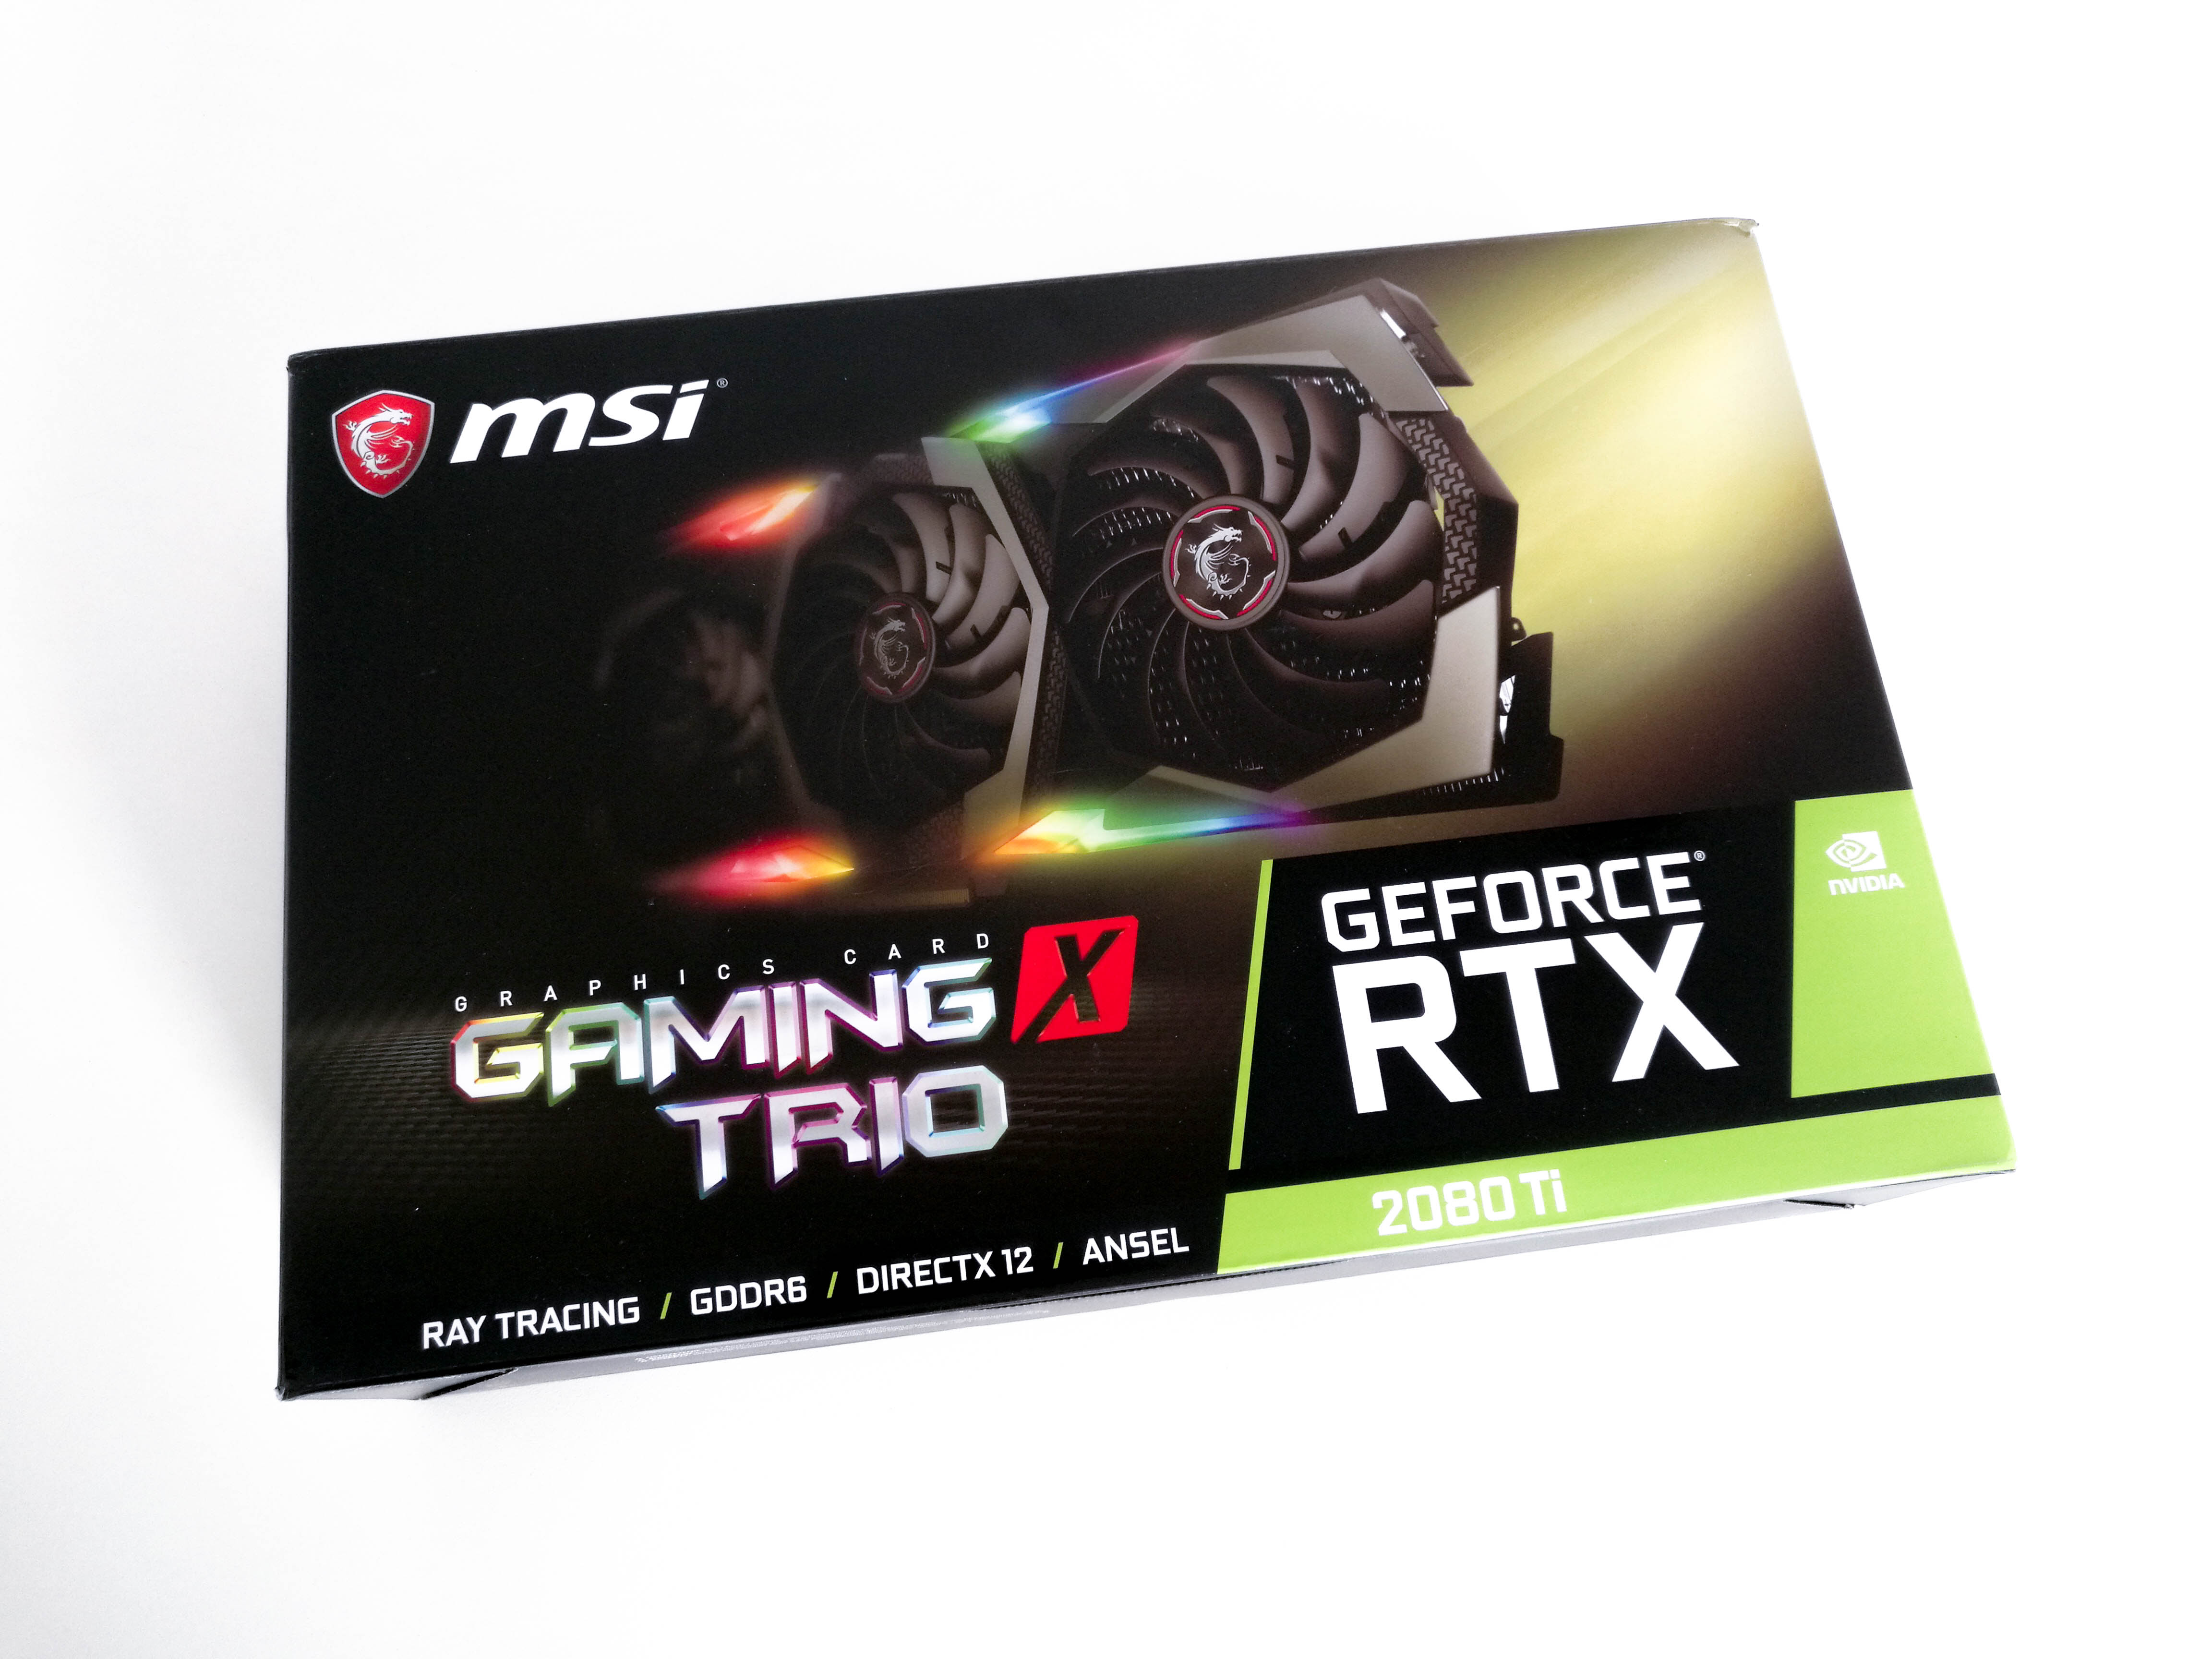 Image 1 : Photos : la GeForce RTX 2080 Ti Gaming X Trio de MSI en détail